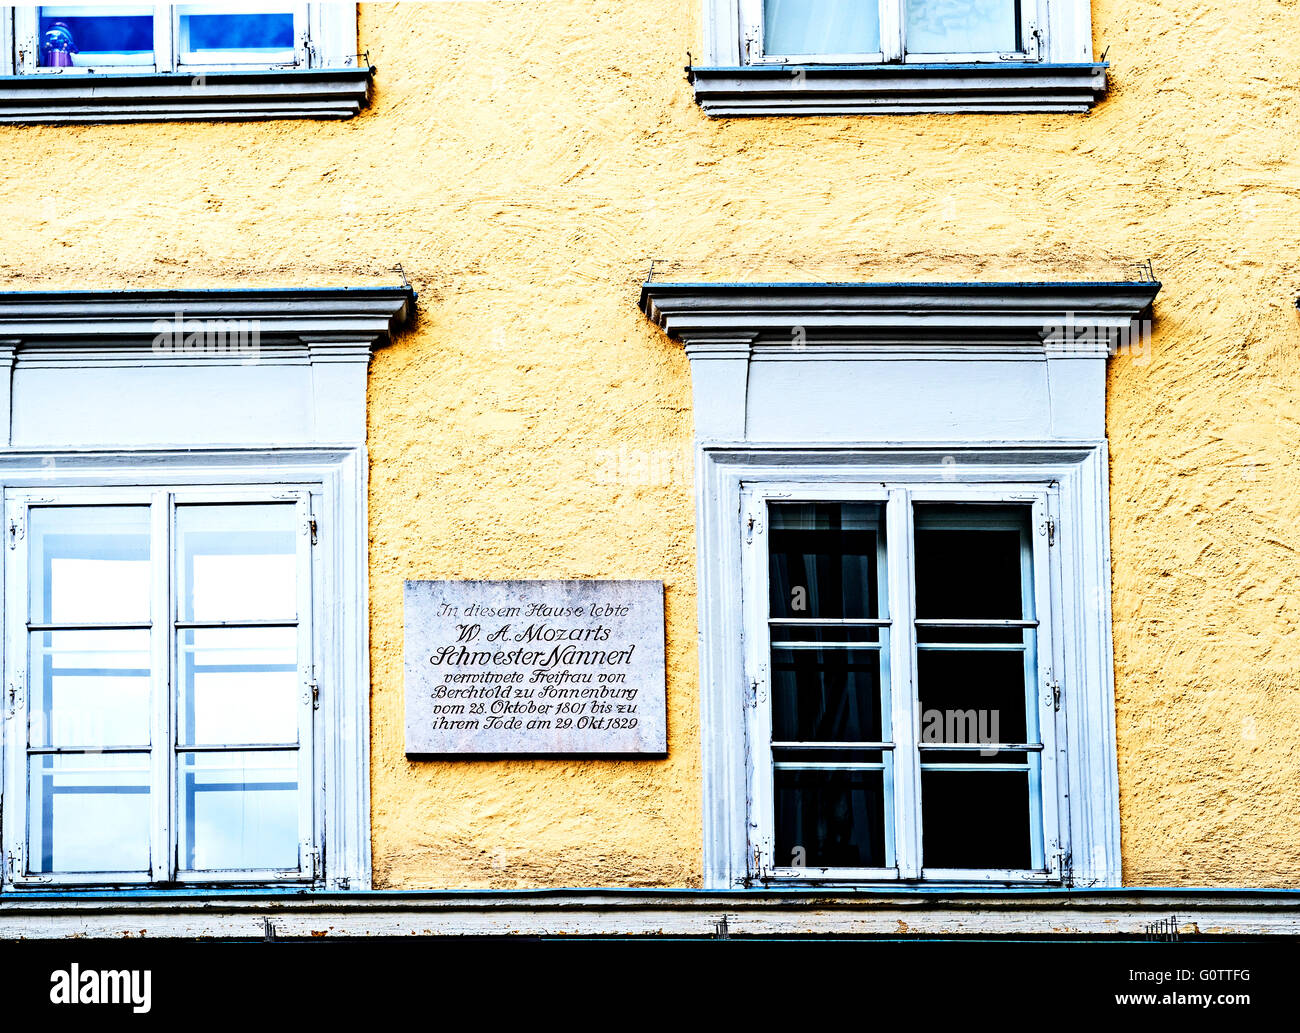 Salzbourg, maison où sœur nannerl Mozart a vécu jusqu'à sa mort ; von Mozarts wohnhaus Sœur Banque D'Images